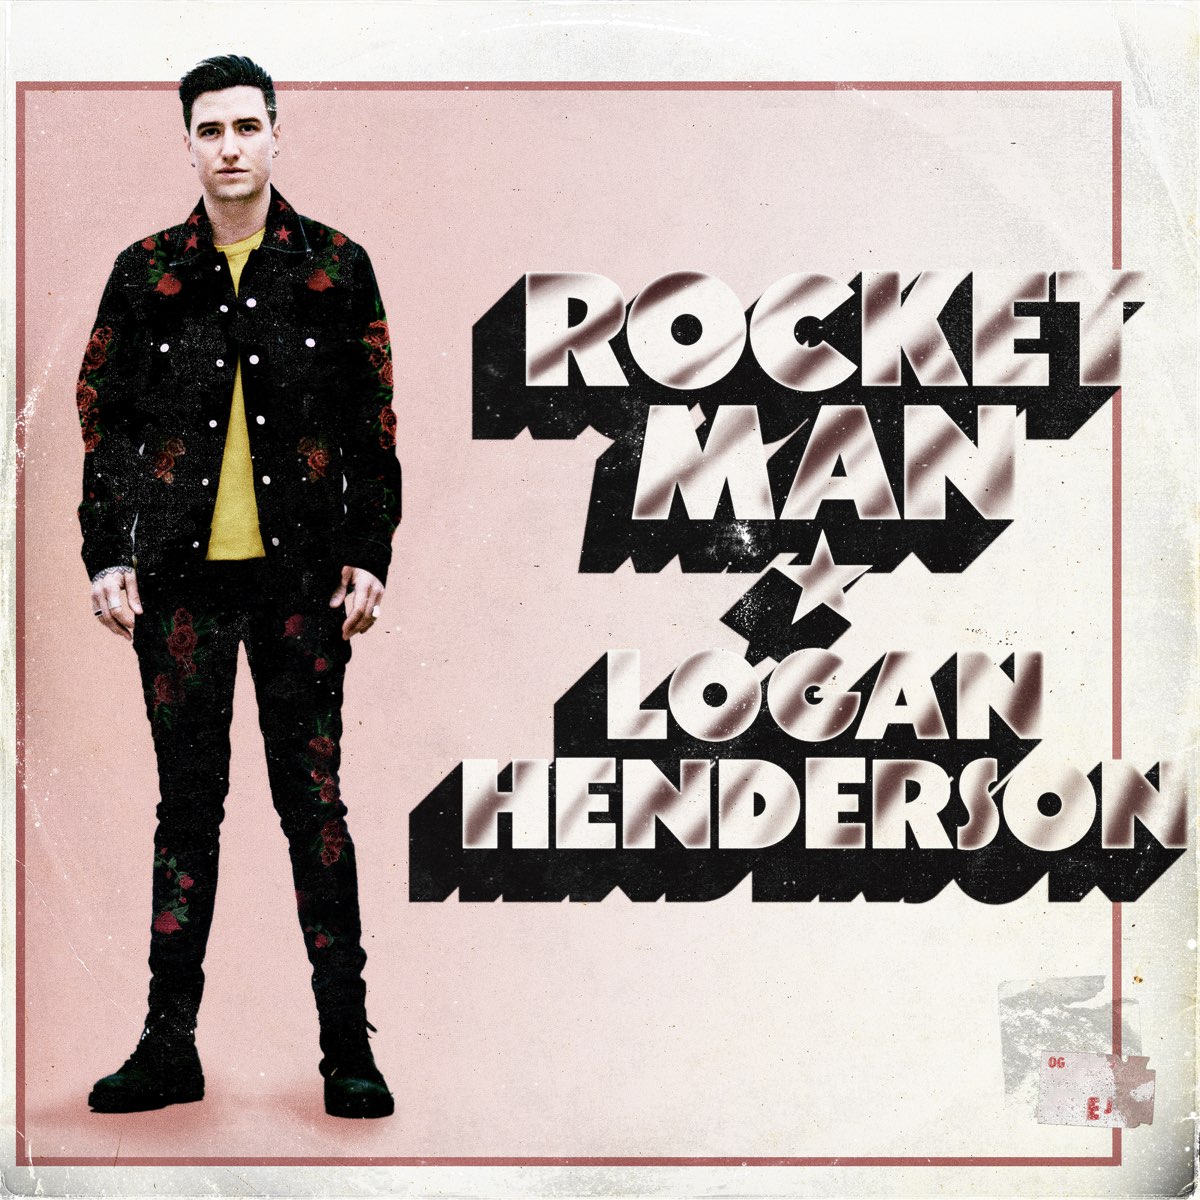 Logan Henderson Rocket Man cover artwork